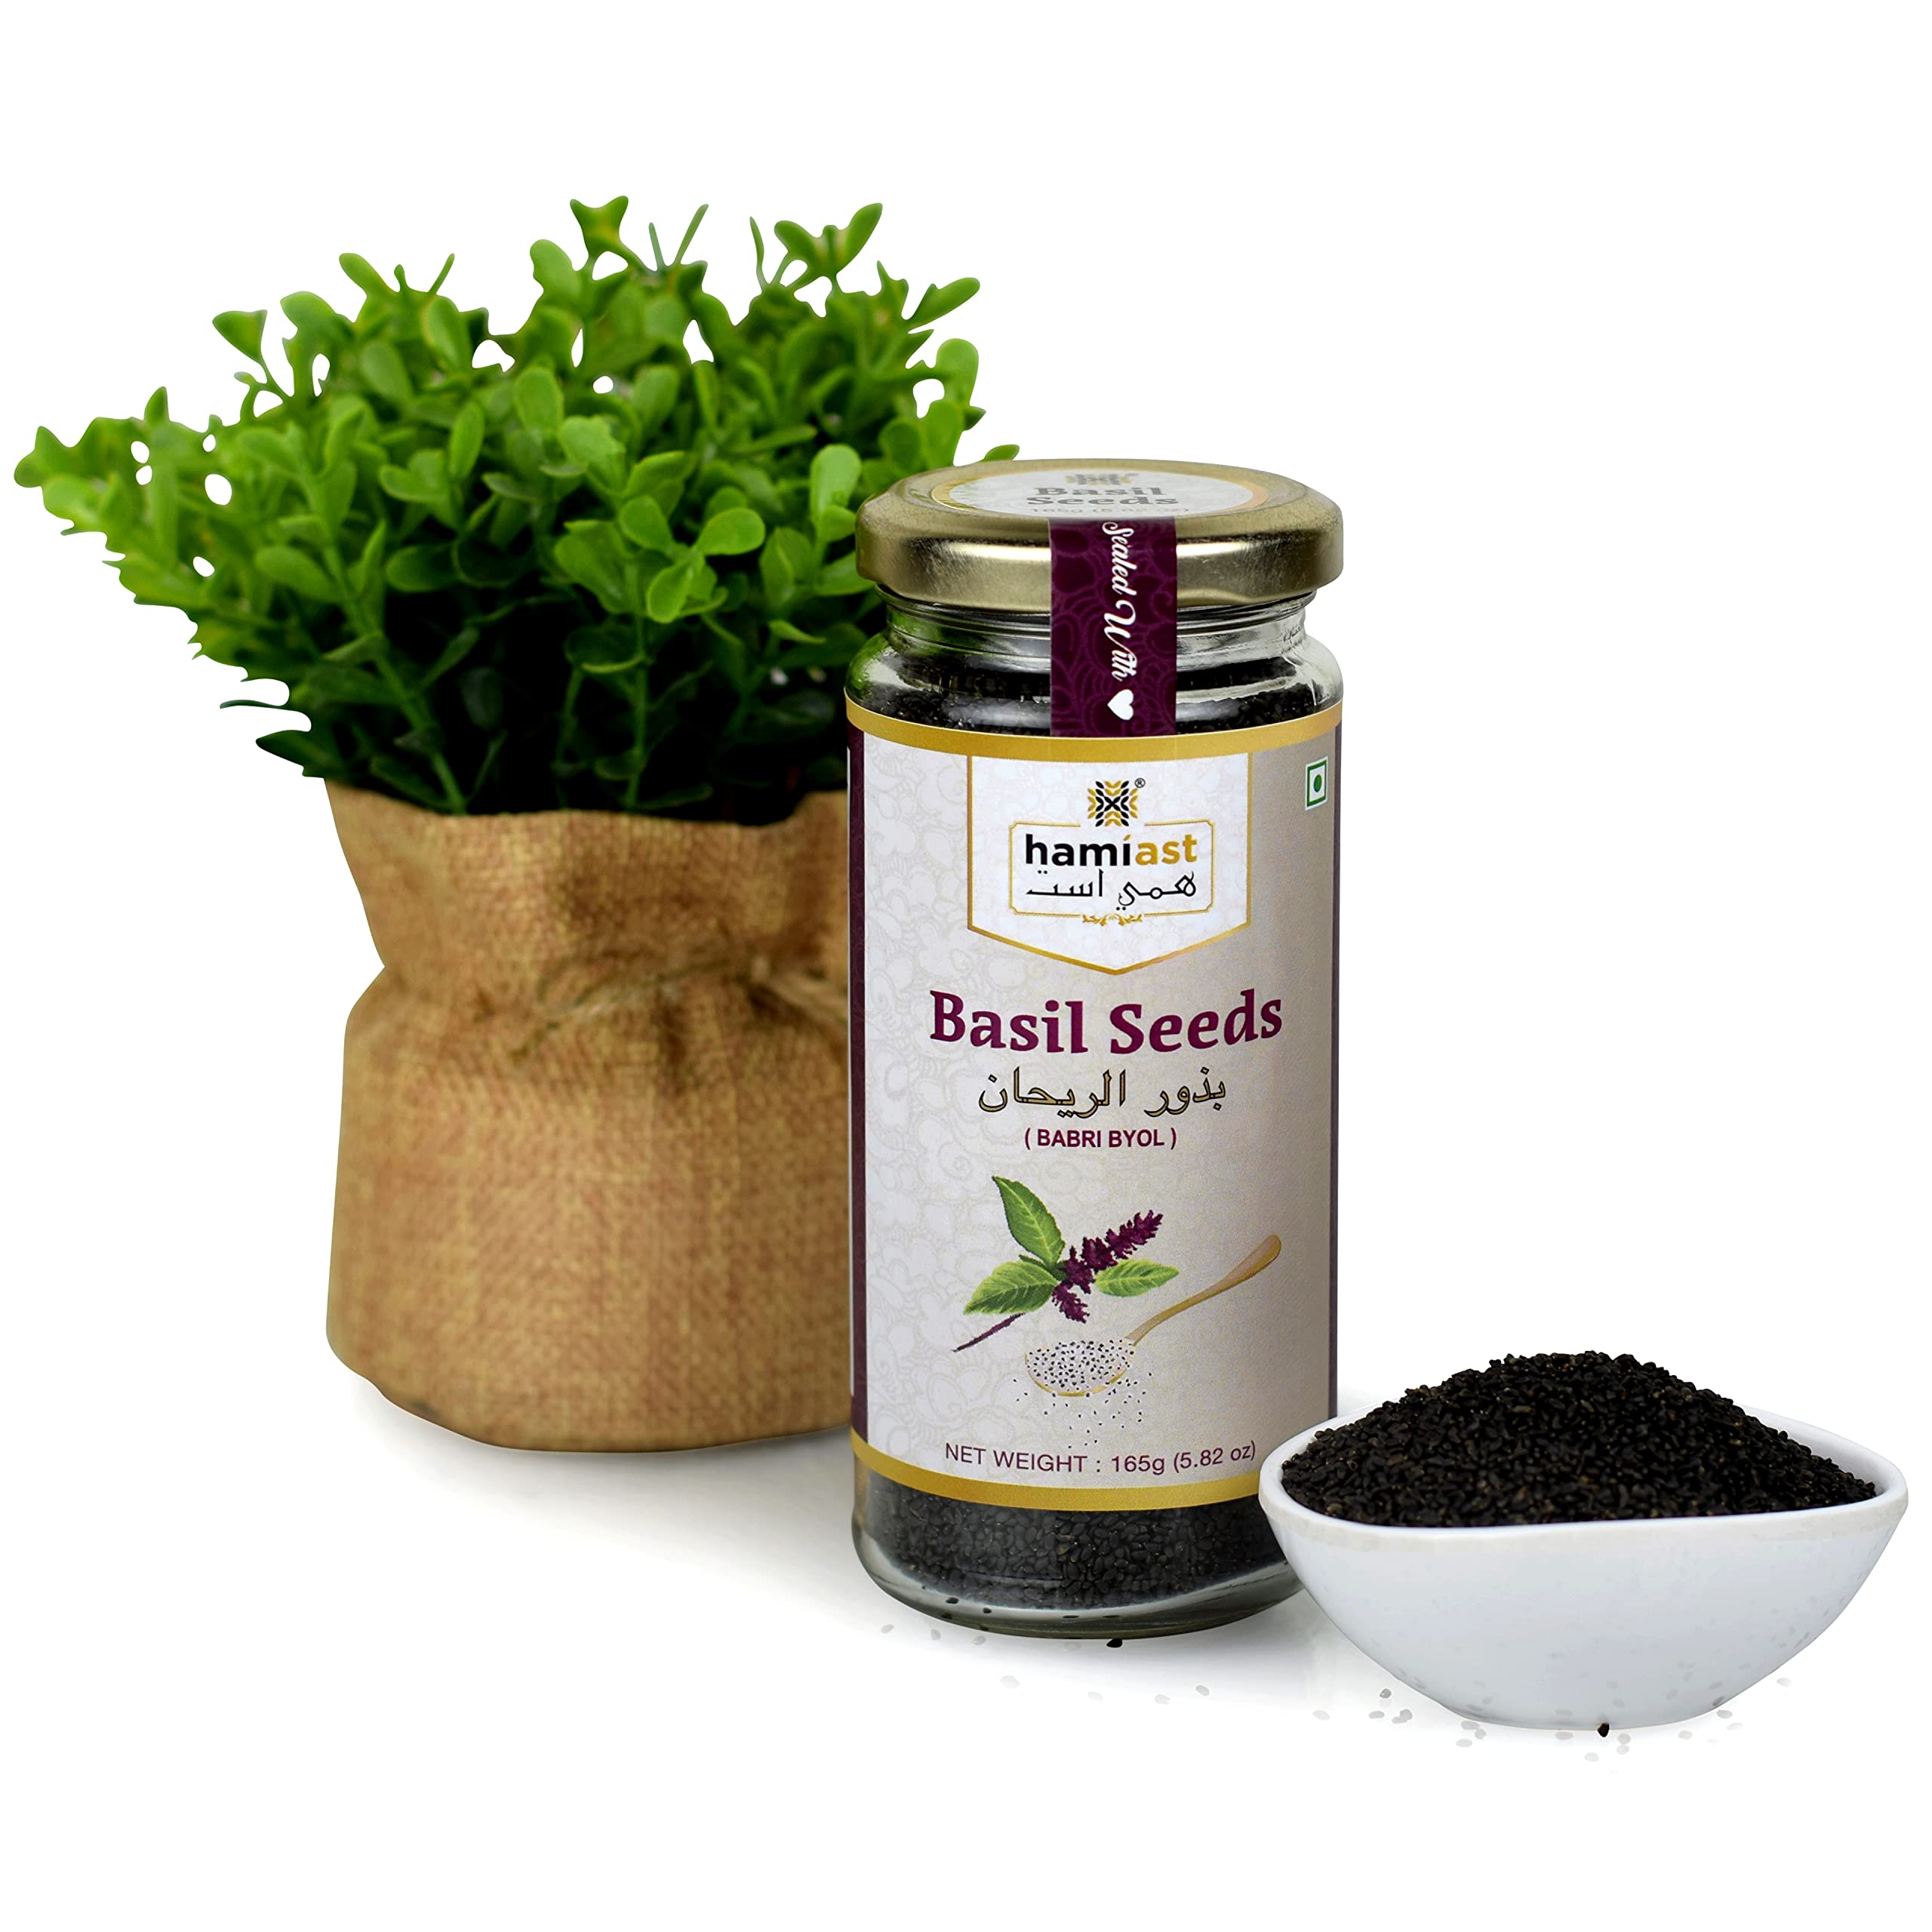 Hamiast Raw Basil Seeds, Sabja, Tukmaria, Babri Byol 150g for Weight loss